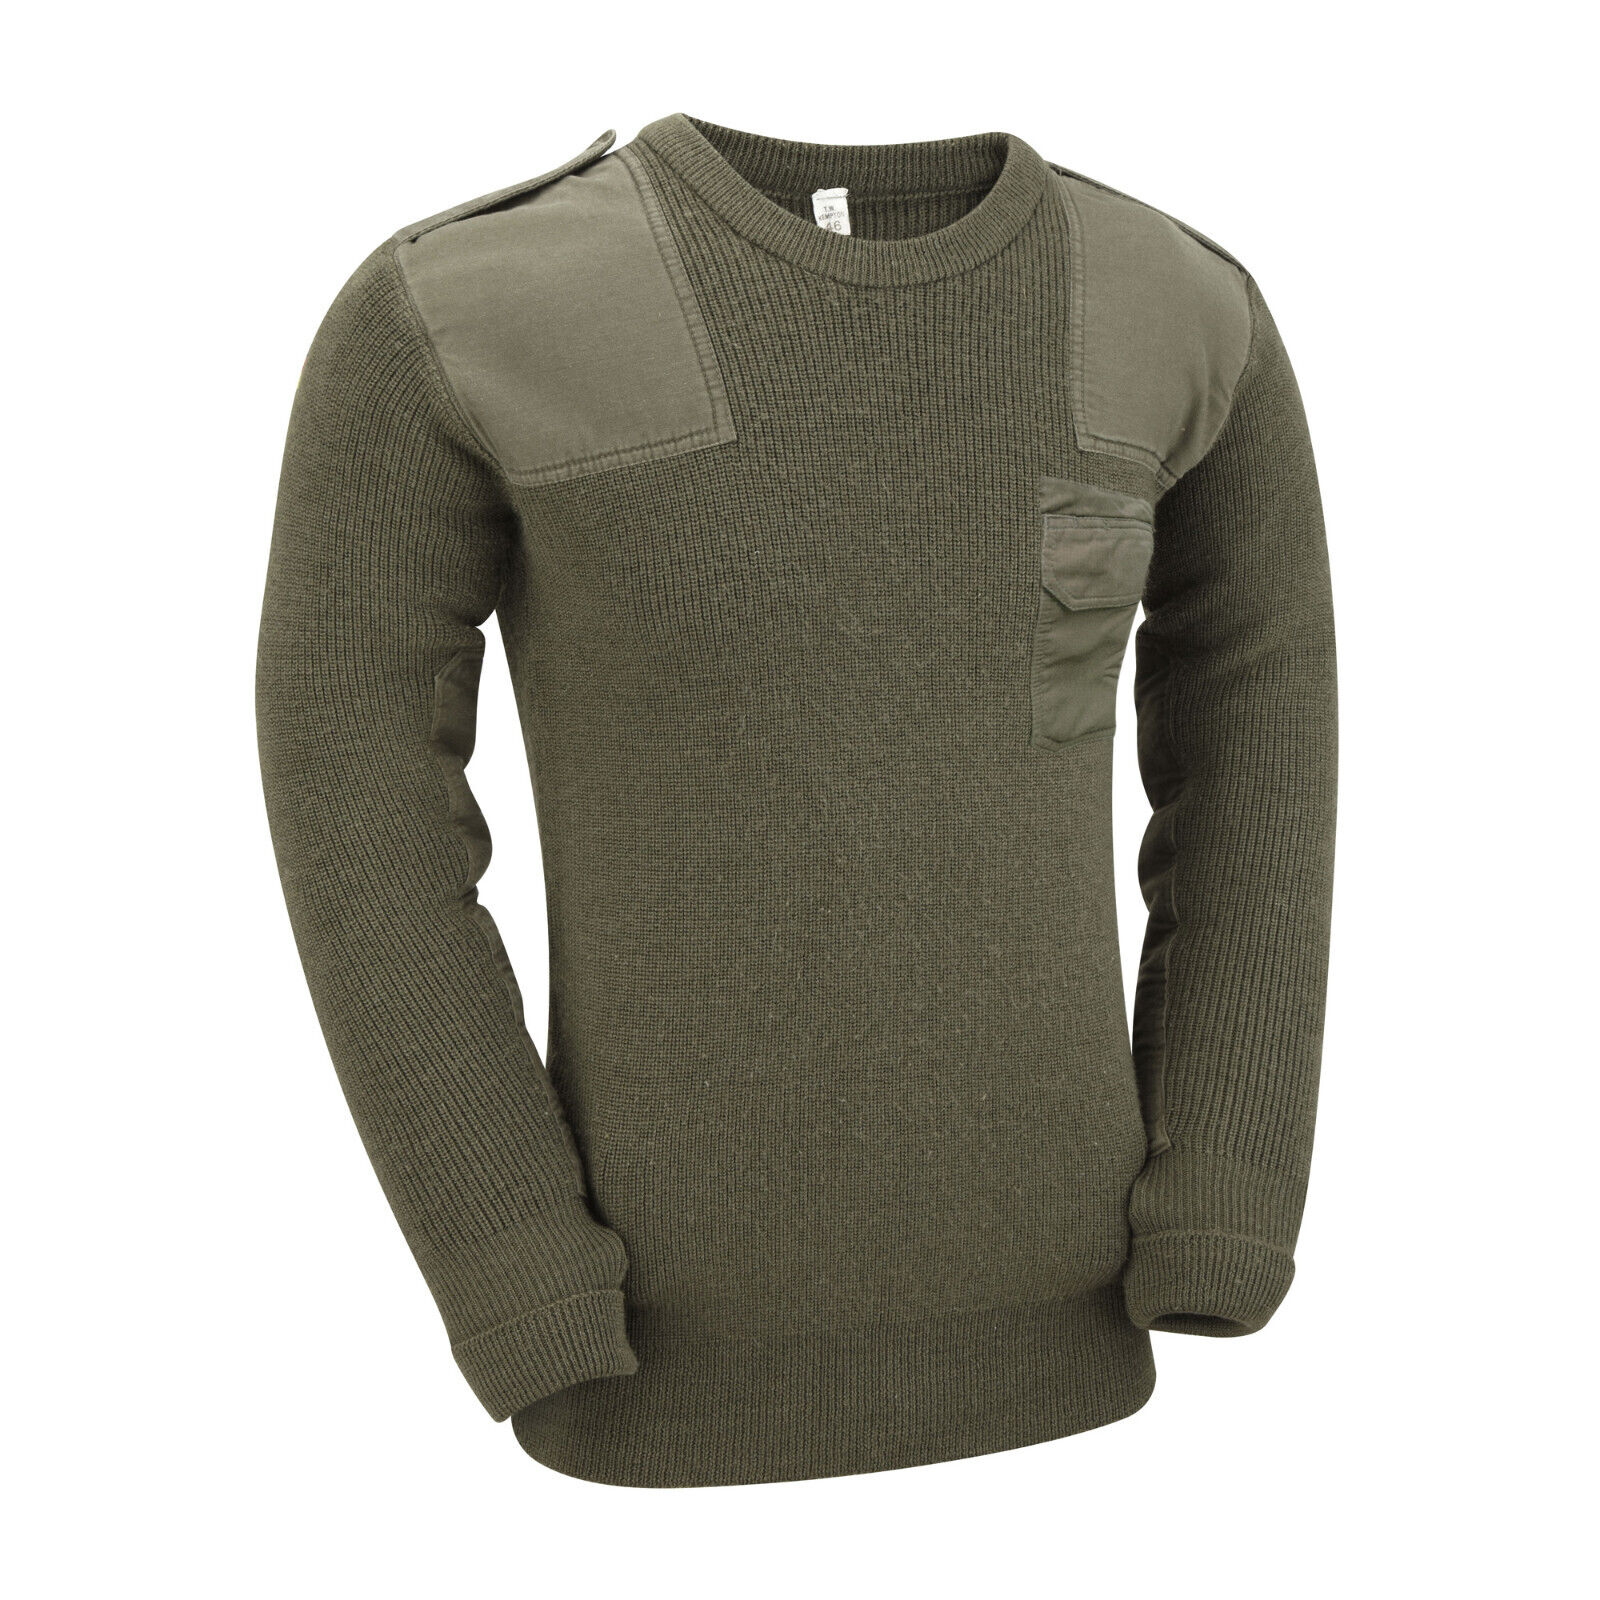 Army Jumper Original German Wool Sweater Work Pullover Camping Fishing Top New